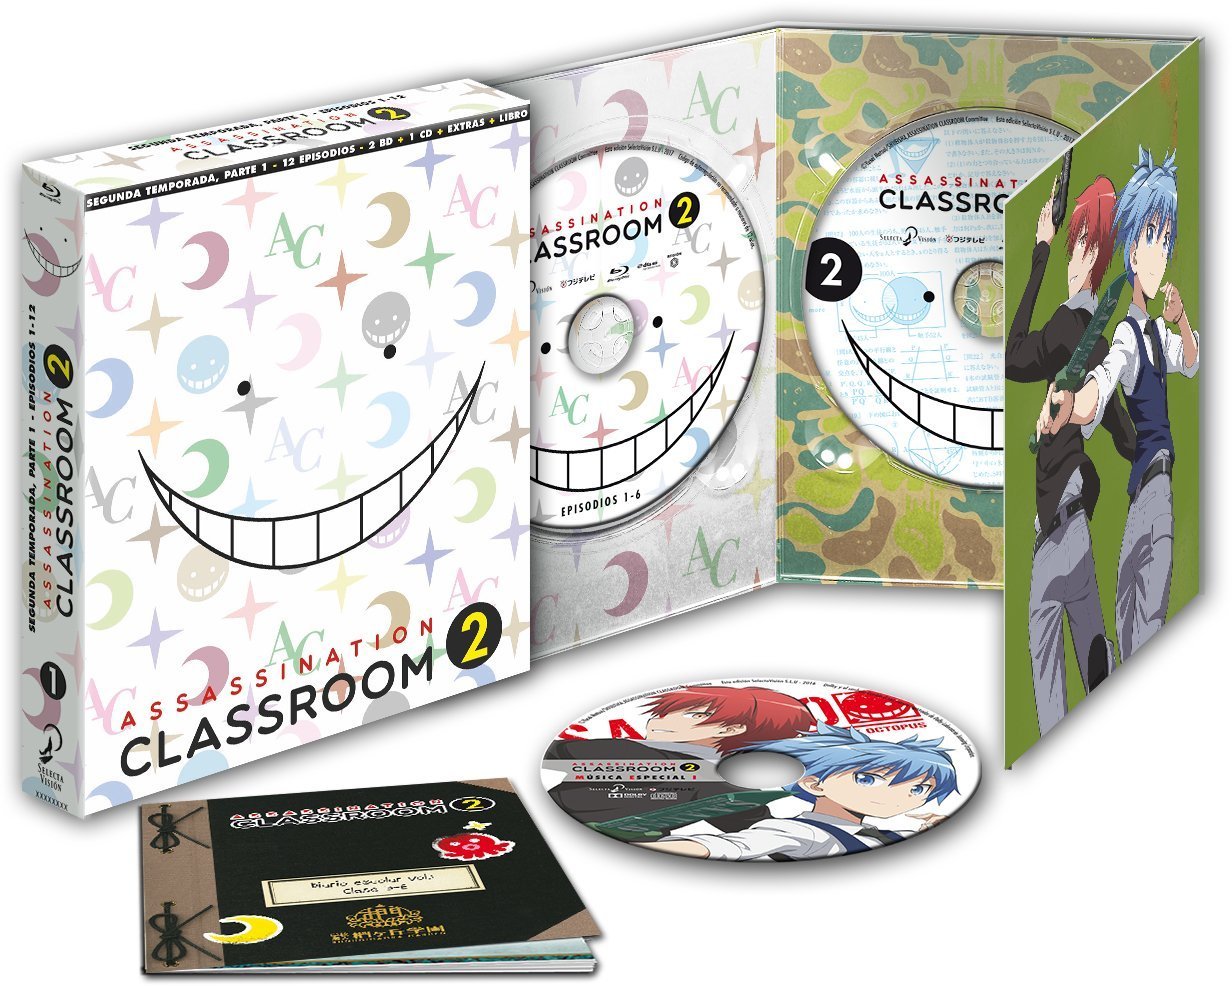 Assassination Classroom Temporada 2 Parte 1 en Blu-ray